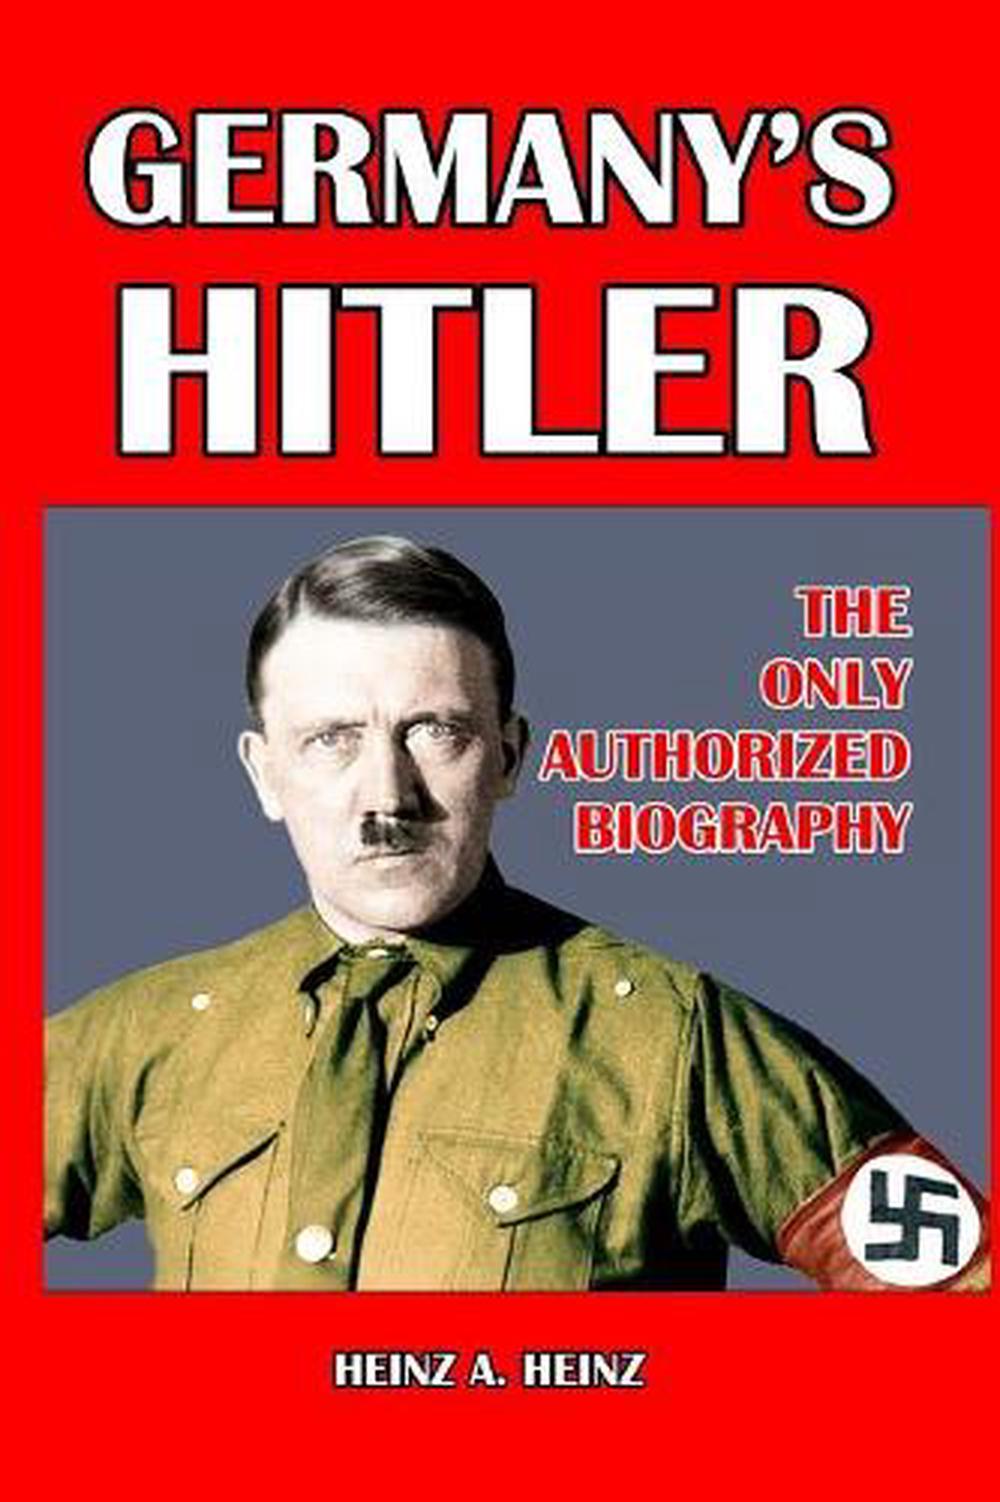 Hitler Height